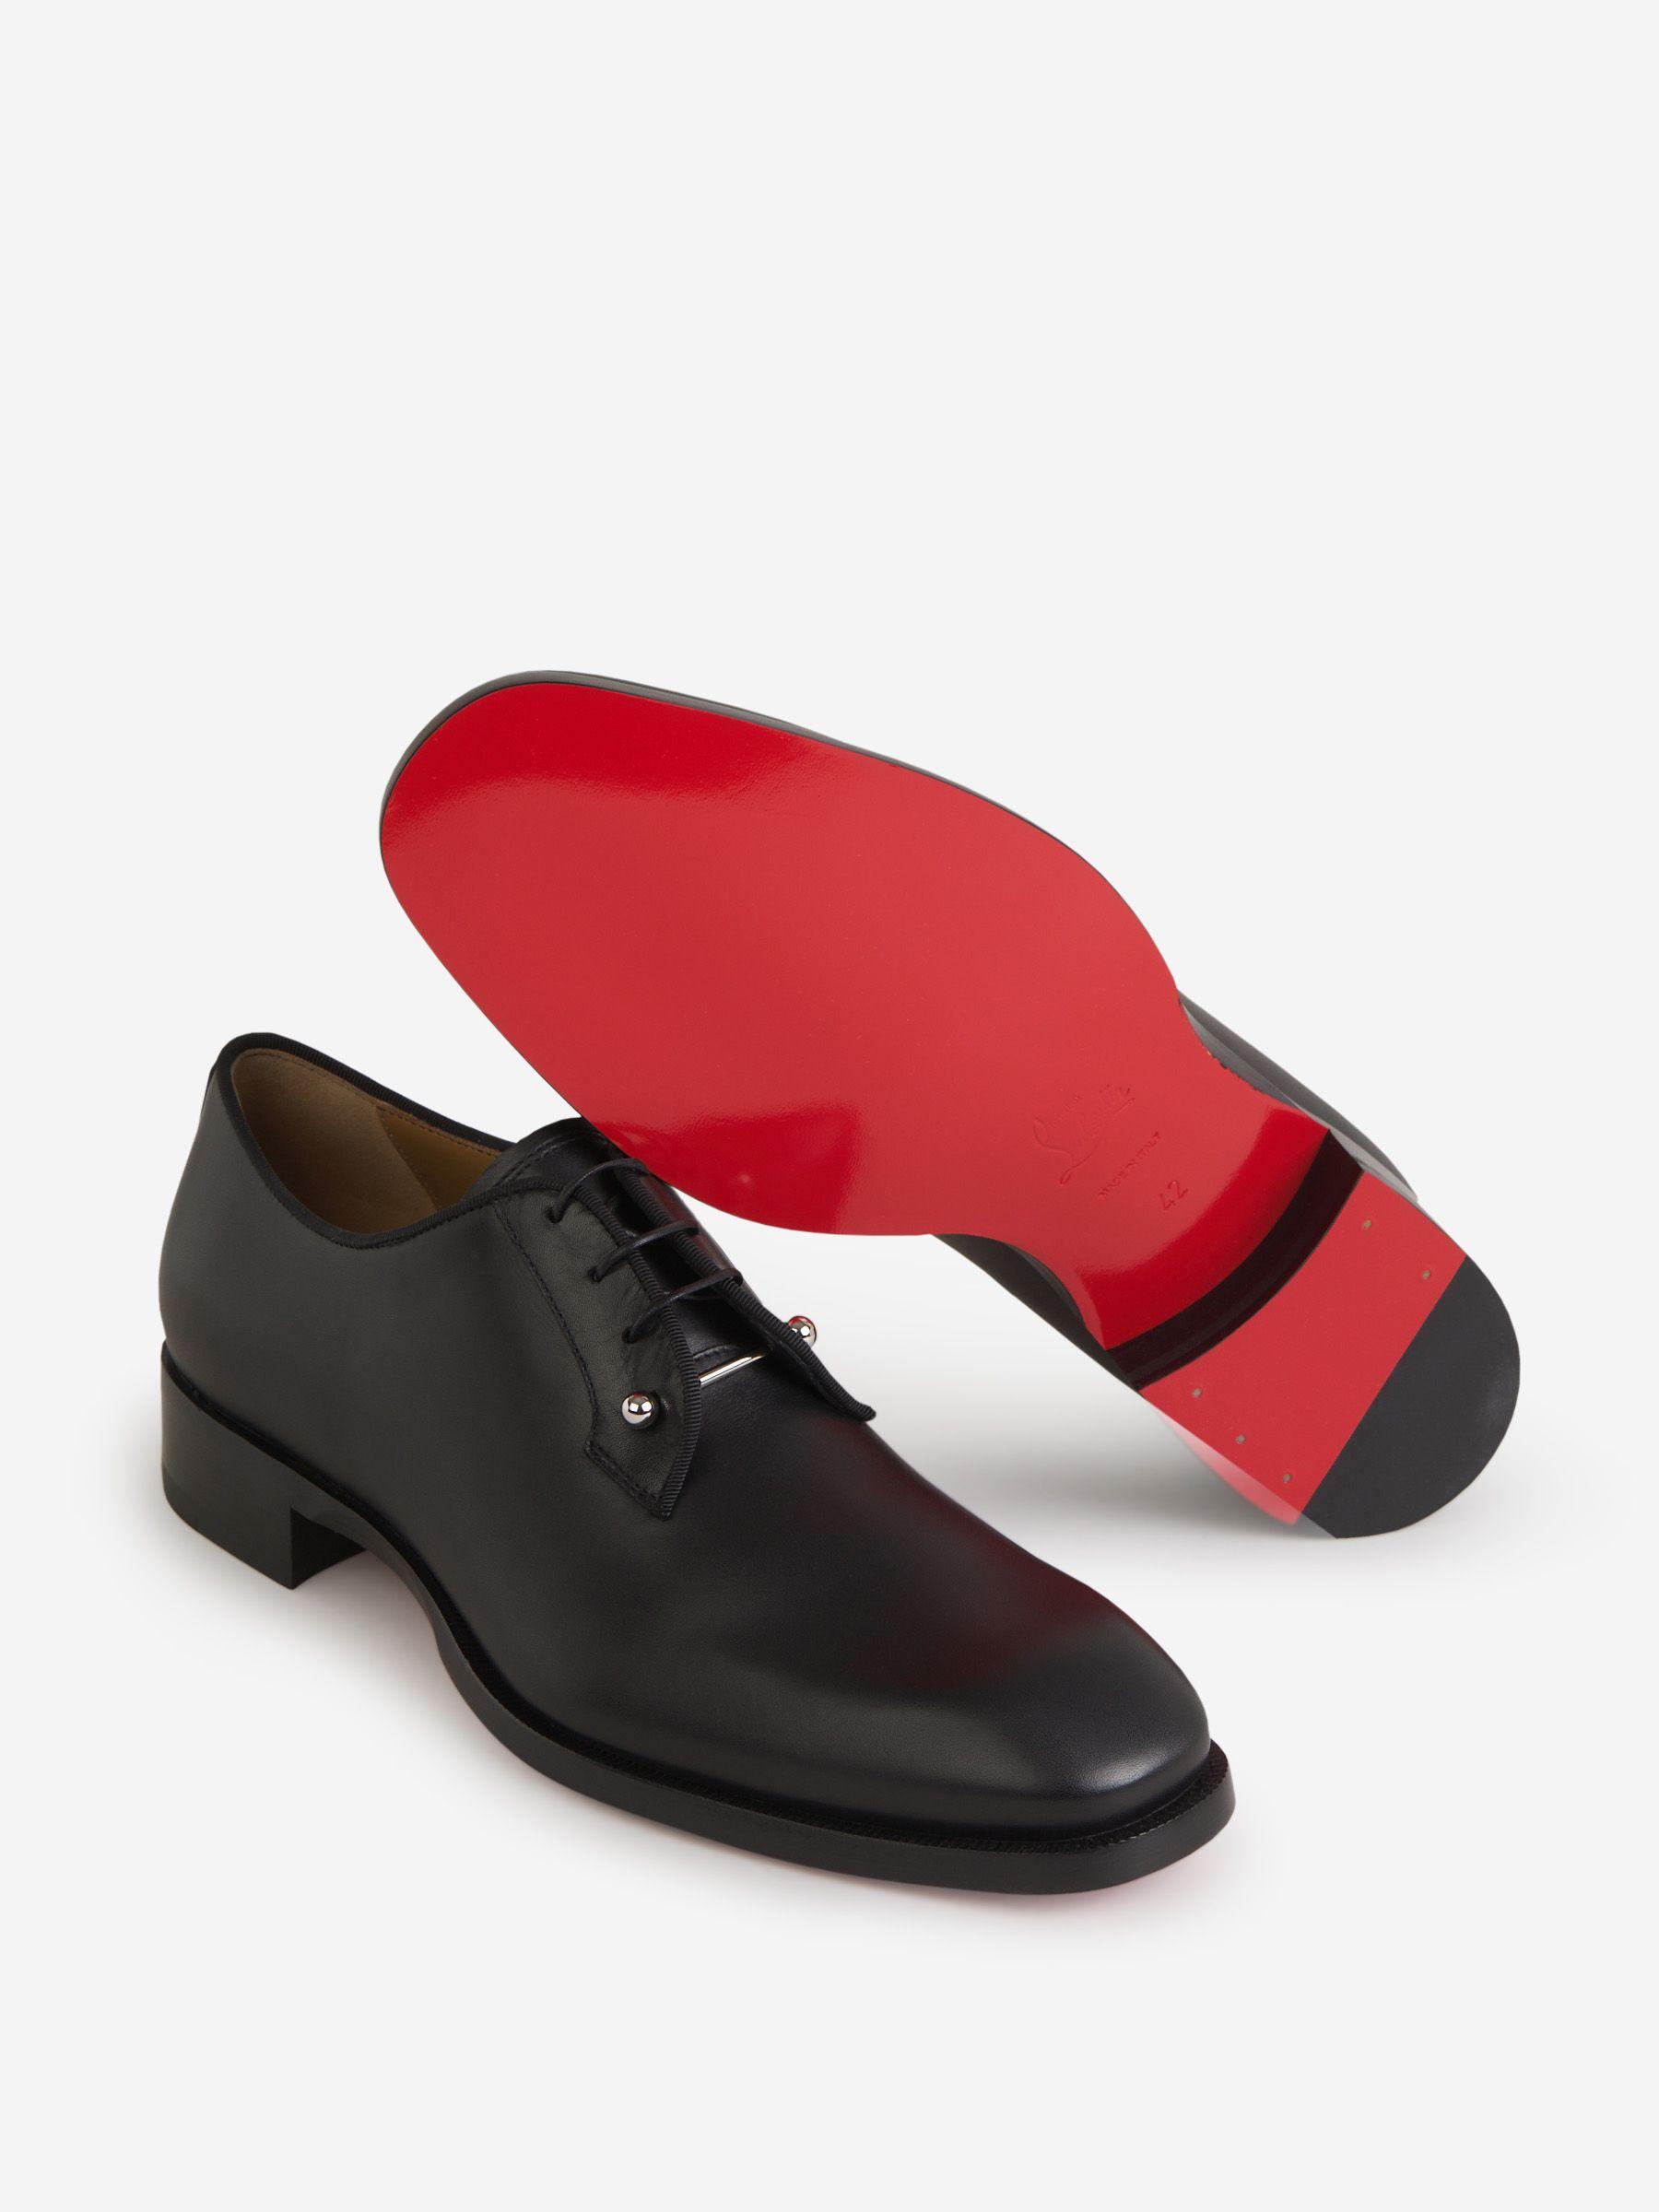 Christian Louboutin Red Bottom Mens Dress Shoes